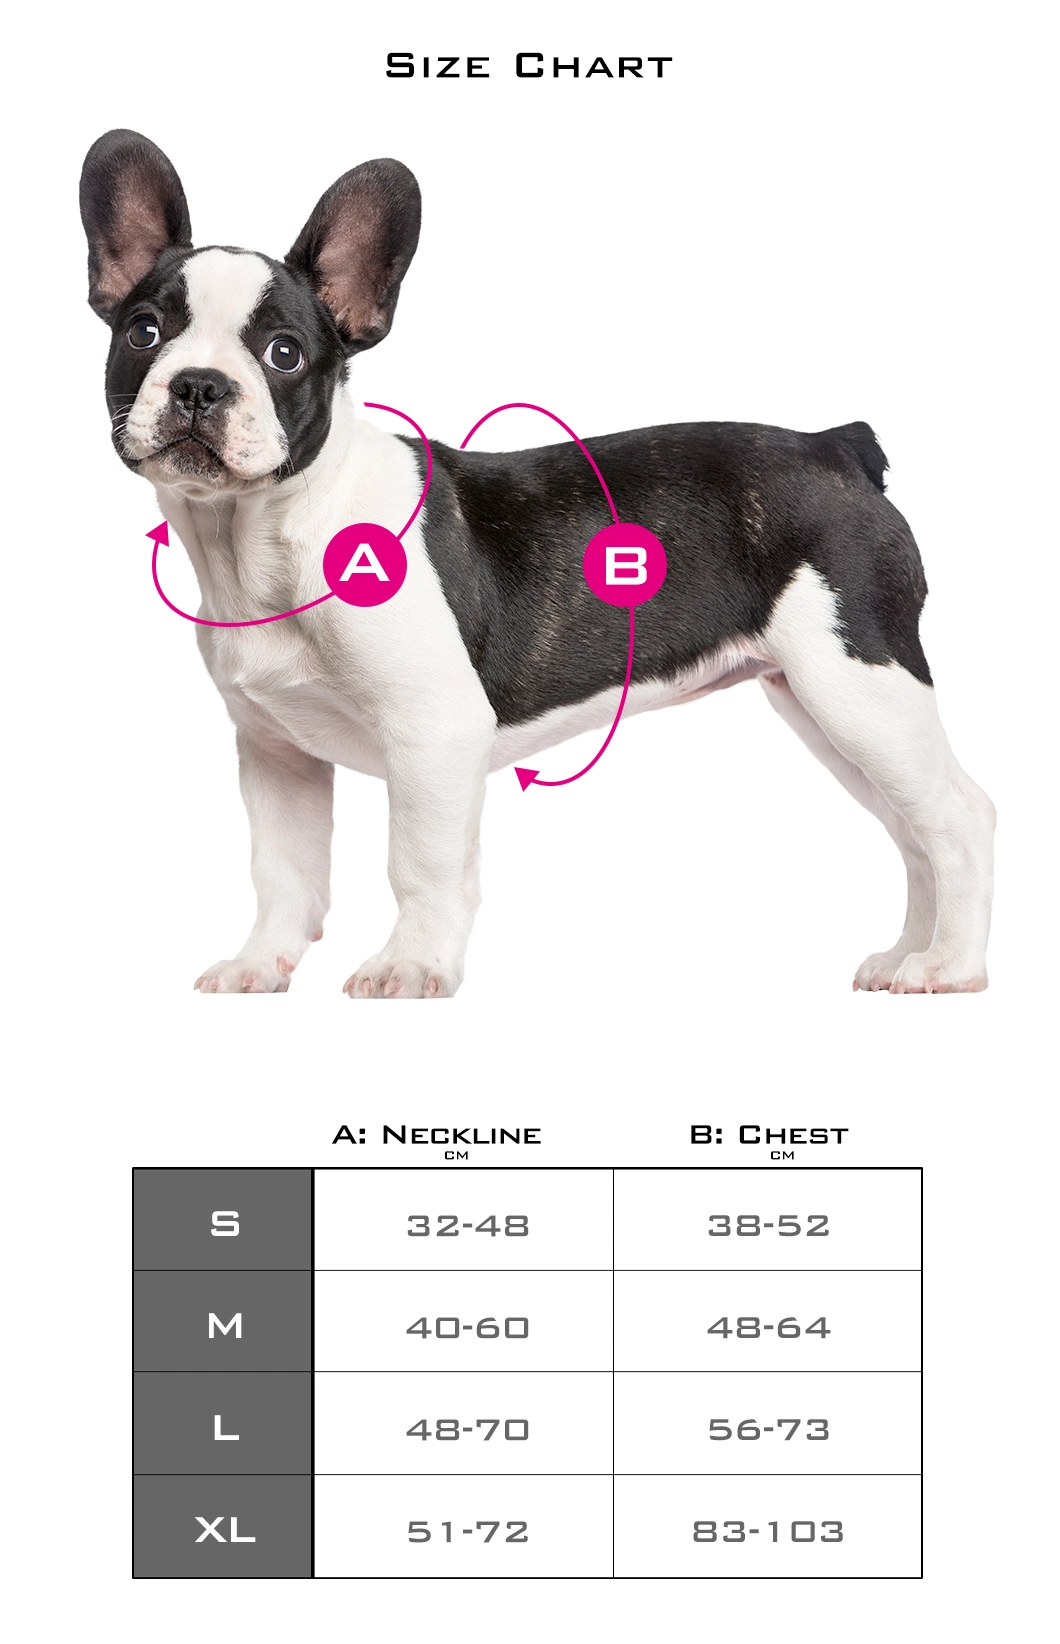 Premium Quality Fashion Dog Harness No-Pull Adjustable Breathable Walking Training Pet Harness Vest